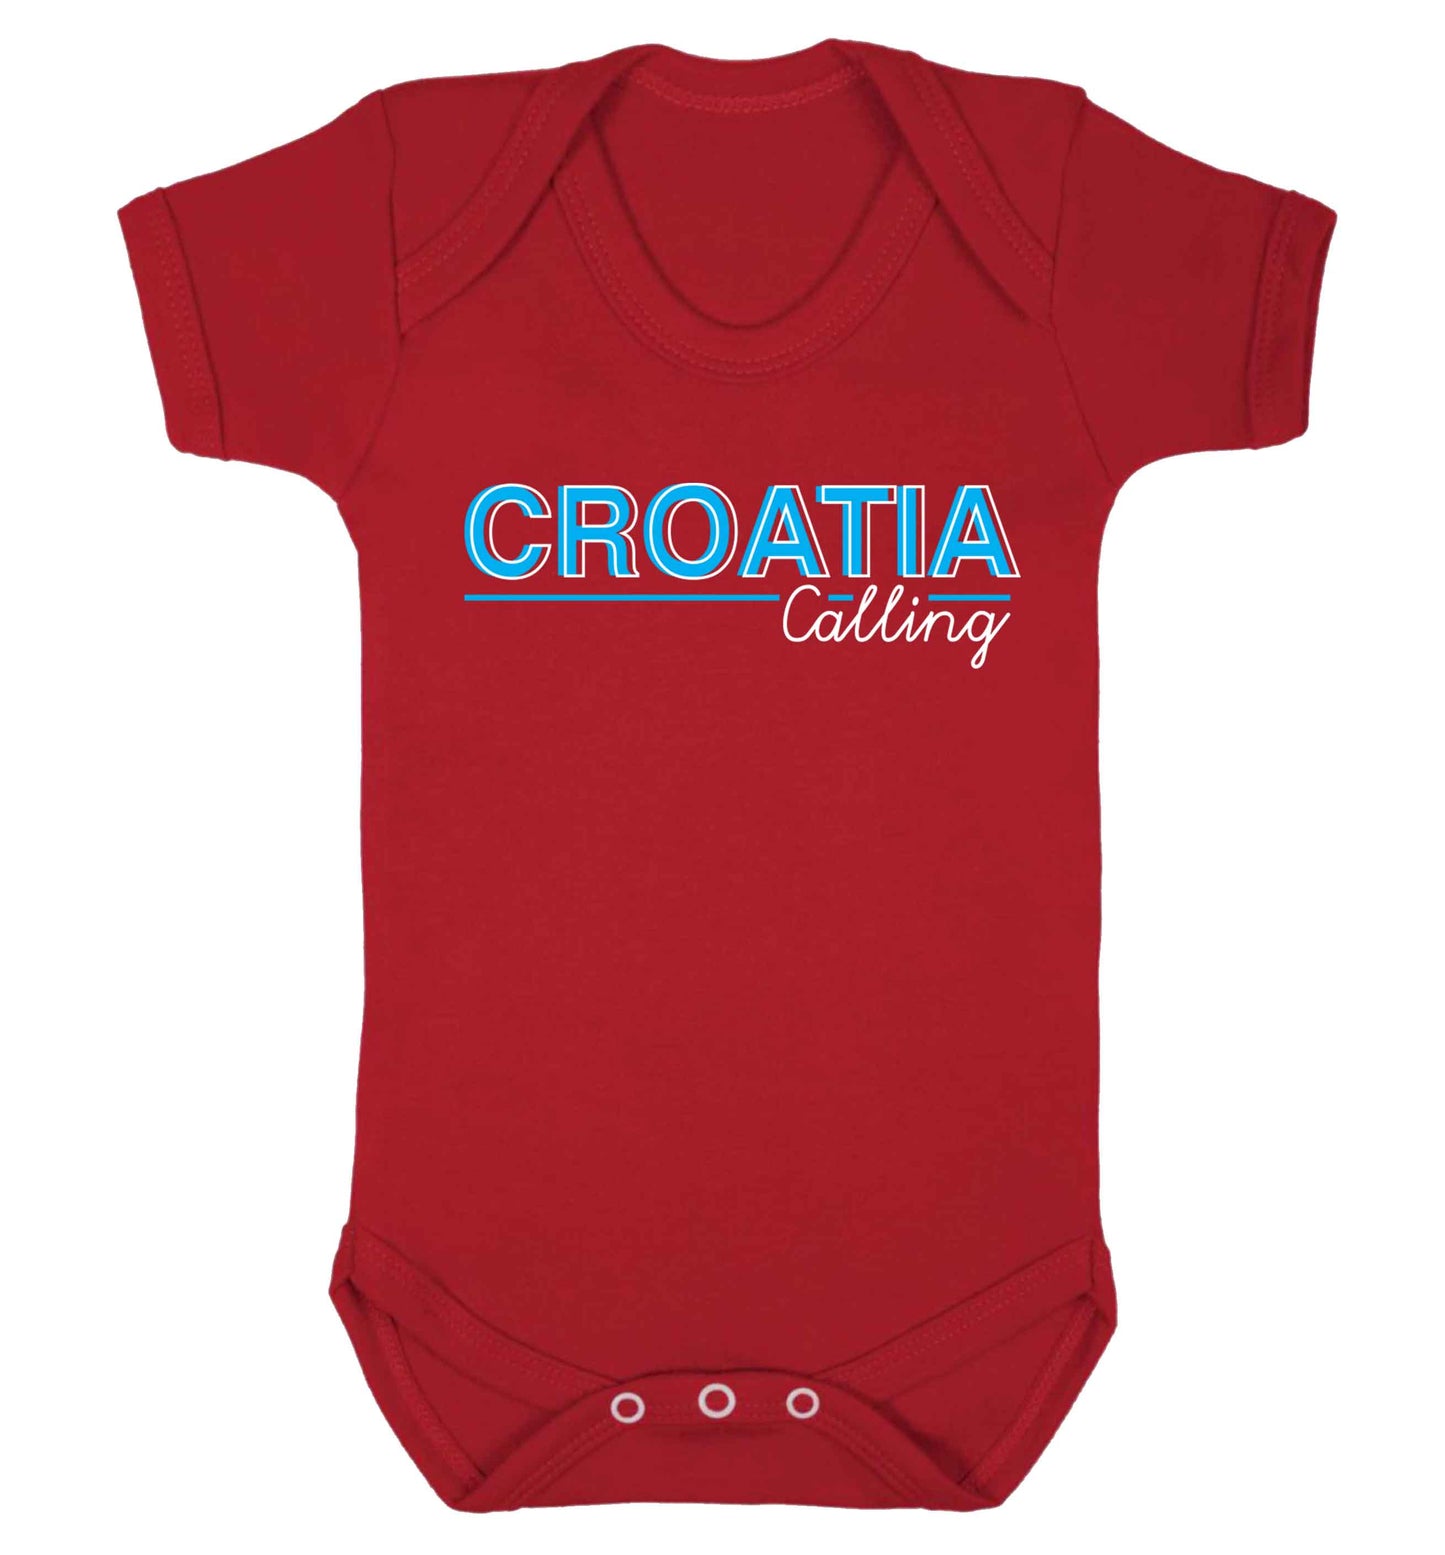 Croatia calling Baby Vest red 18-24 months